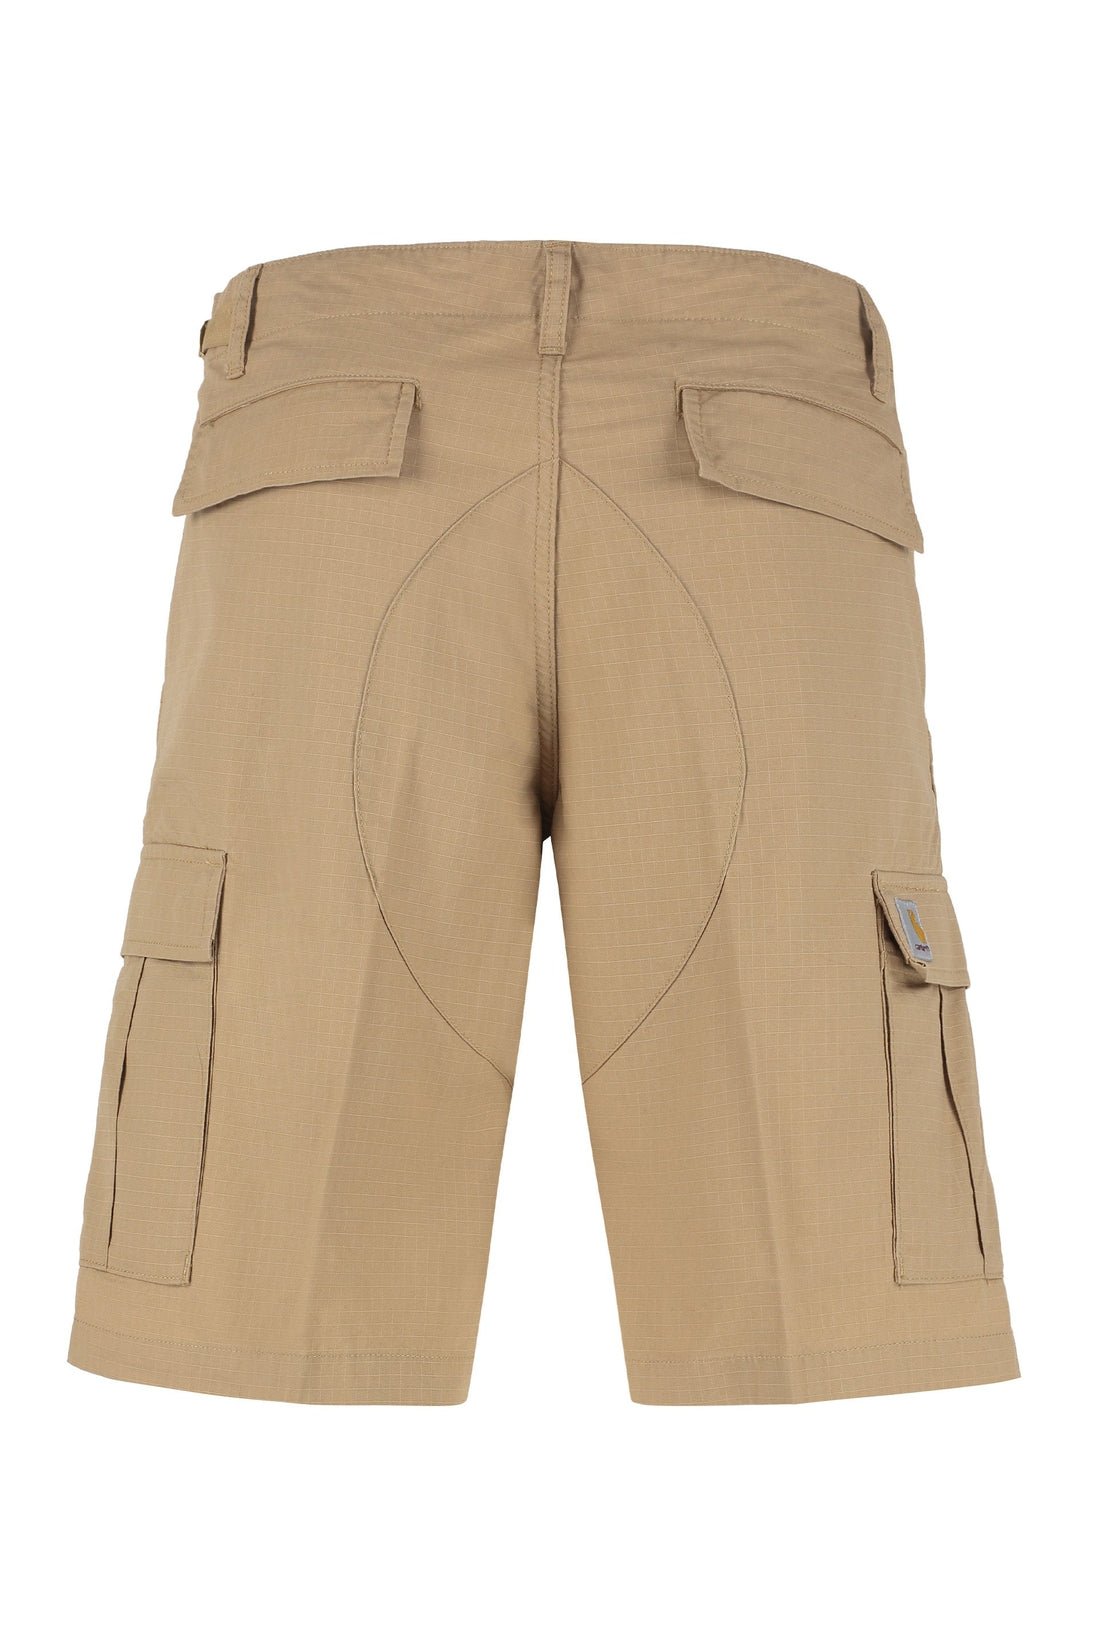 Carhartt-OUTLET-SALE-Aviation cotton bermuda shorts-ARCHIVIST